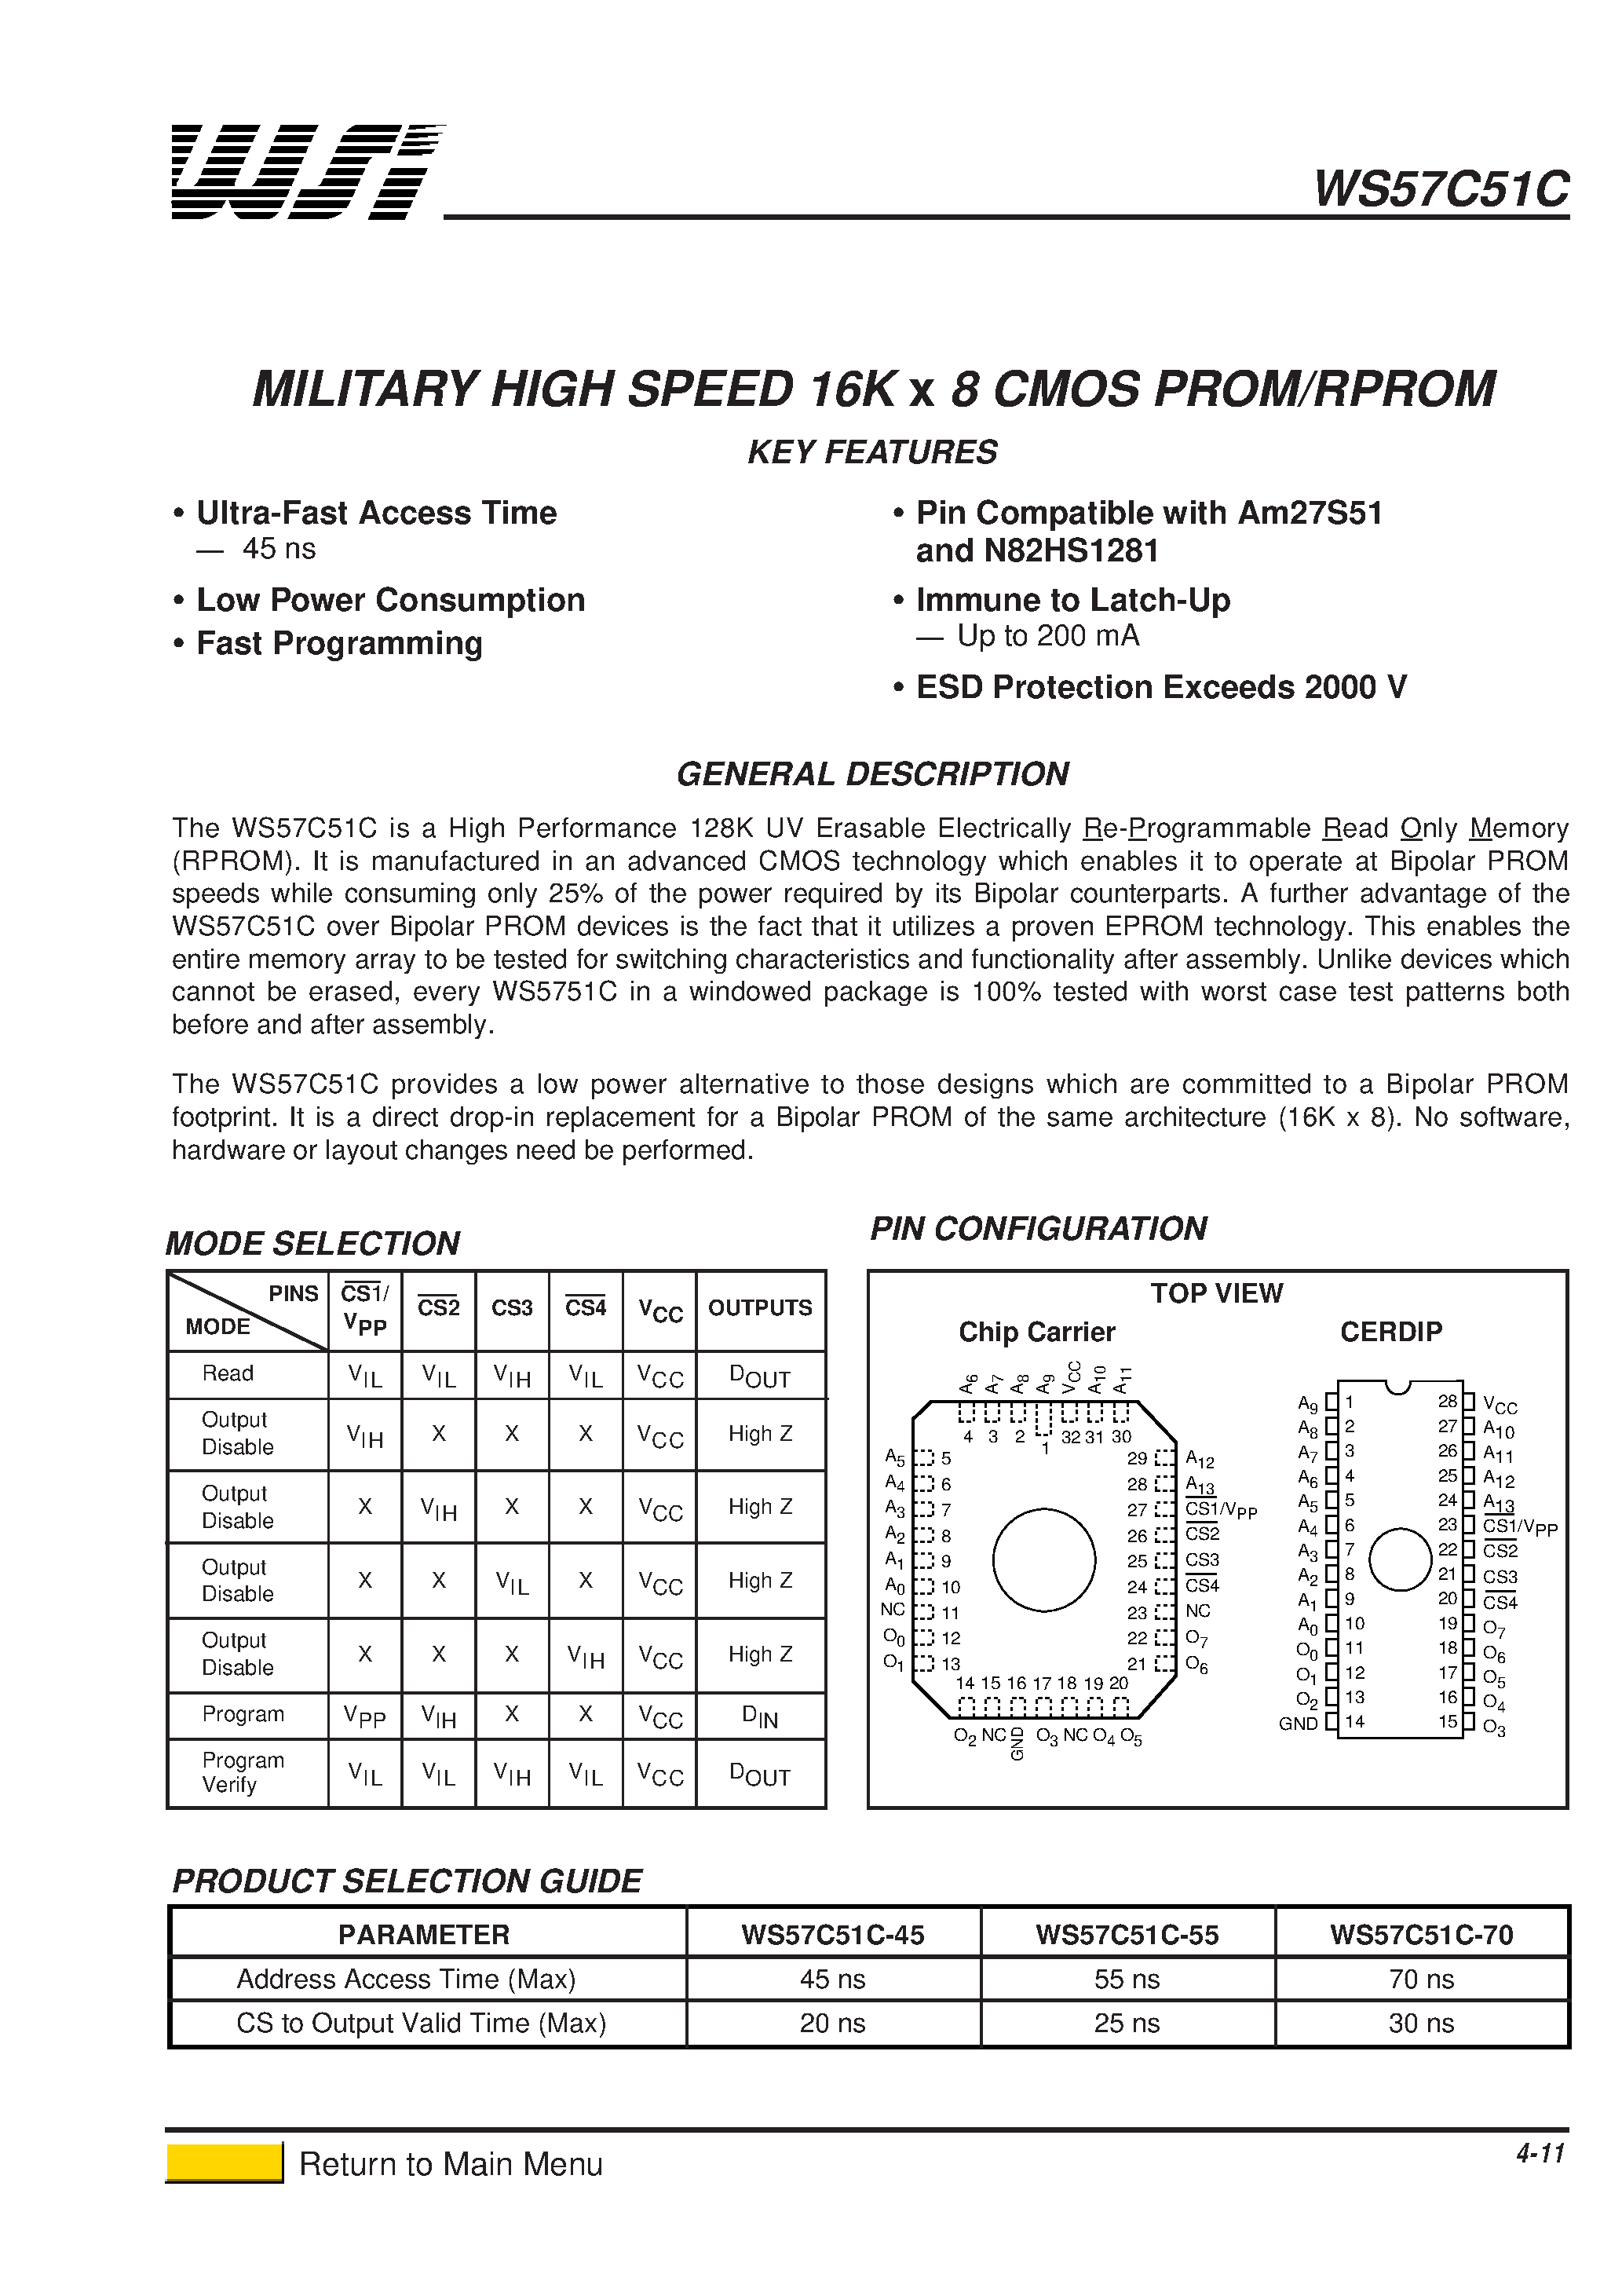 Даташит WS57C51C-55 - MILITARY HIGH SPEED 16K x 8 CMOS PROM/RPROM страница 1